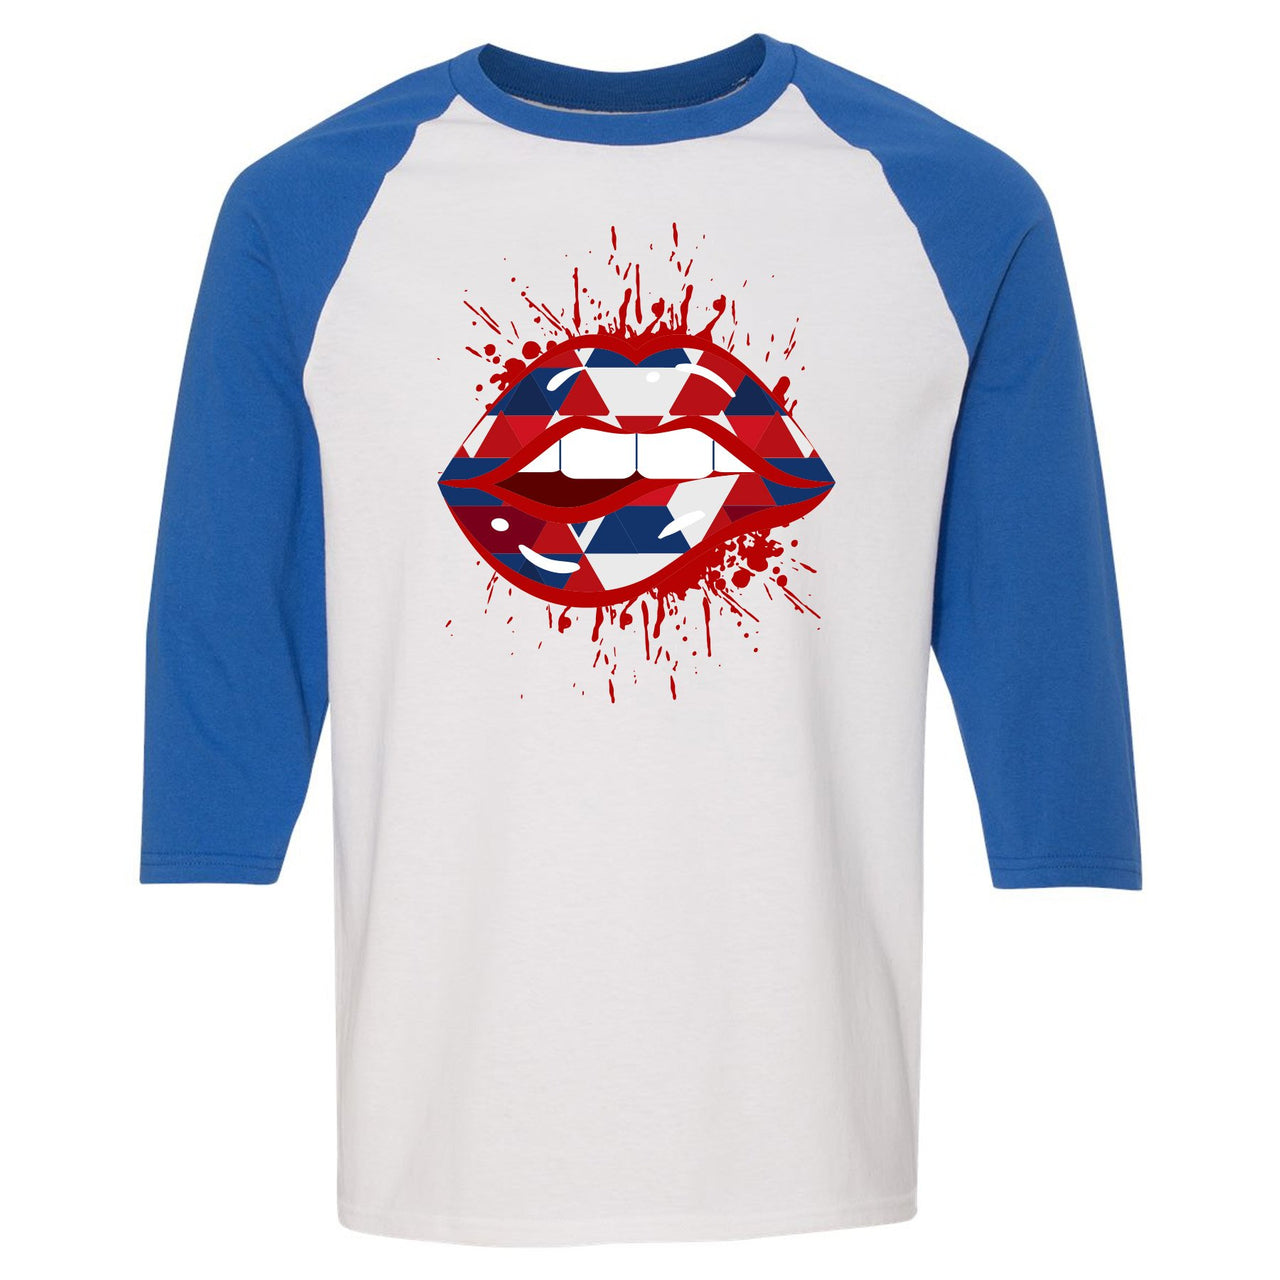 USA One Foams Raglan T Shirt | Geometric Lips Splatter, White and Blue